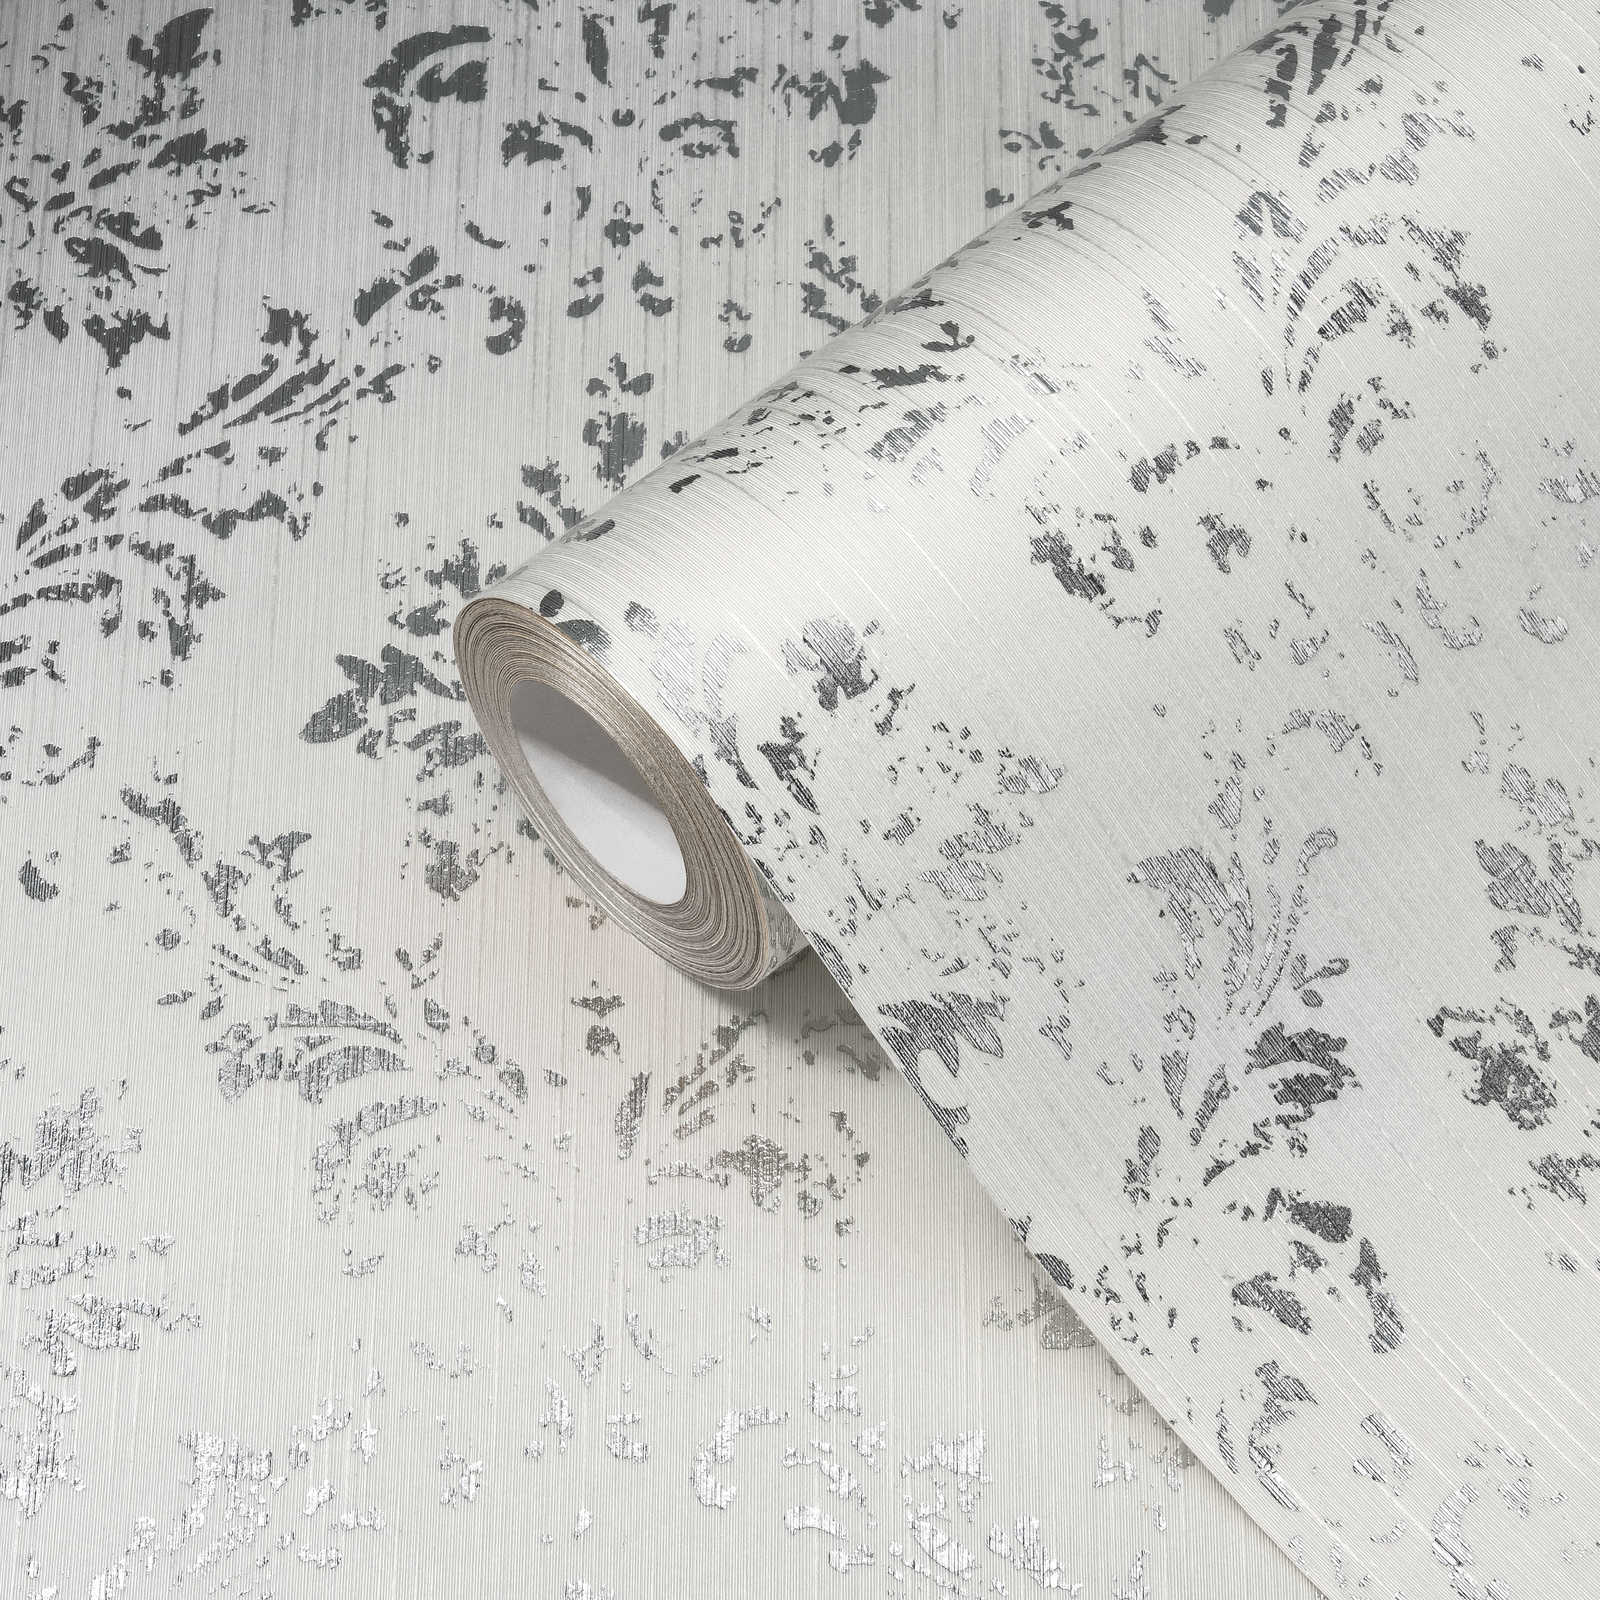             Papel pintado con adornos de plata en look usado - blanco, plata
        